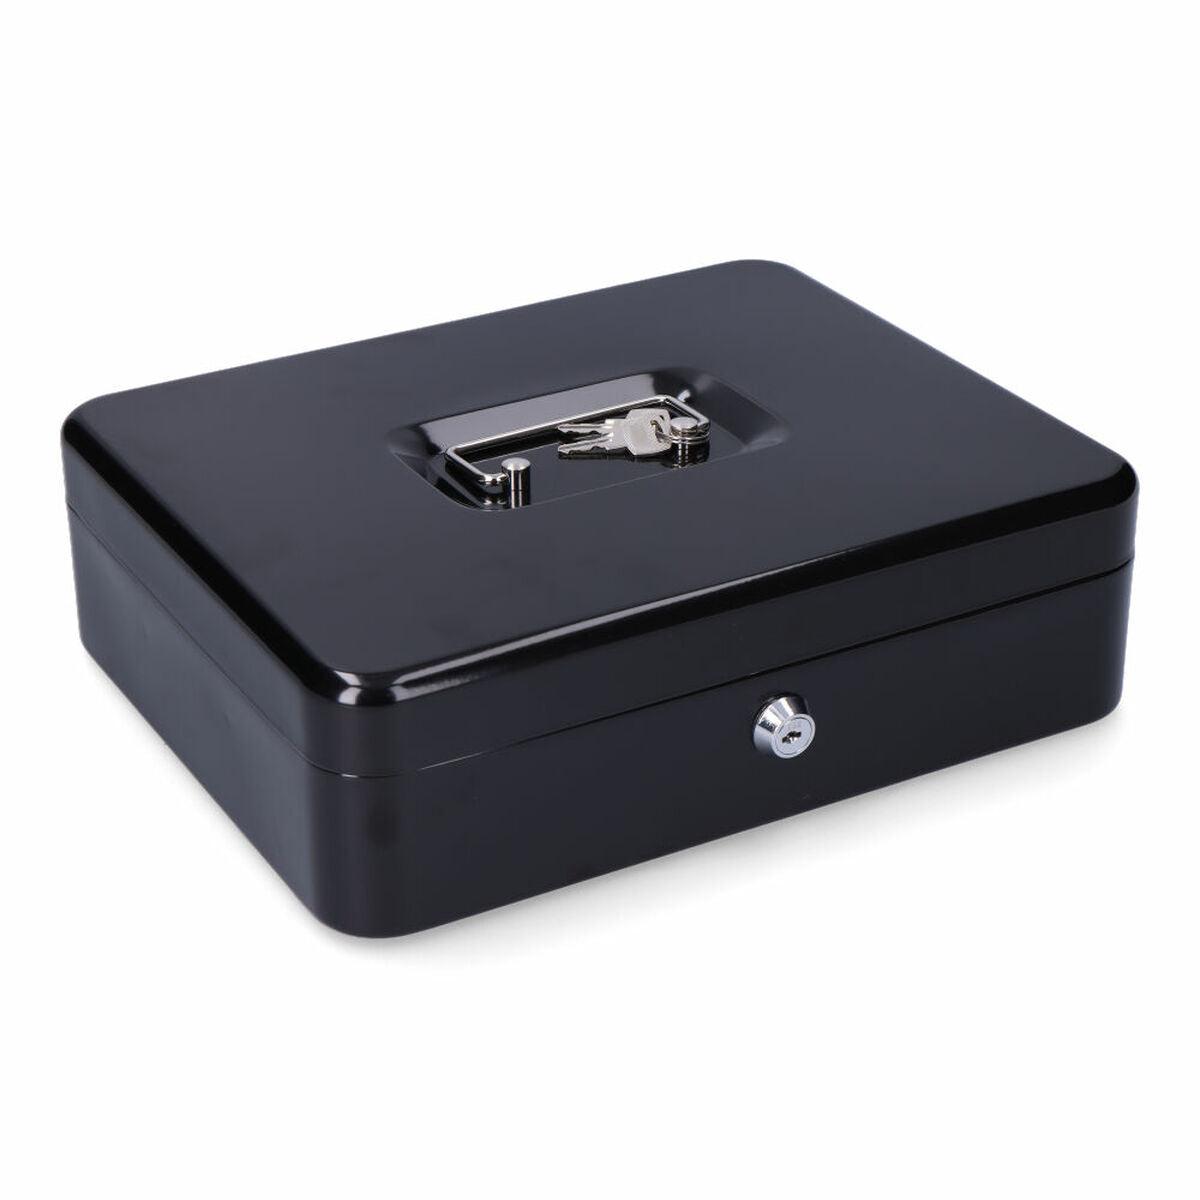 Safe-deposit box Micel CFC09 M13402 Black Steel 30 x 24 x 9 cm - Sterilamo